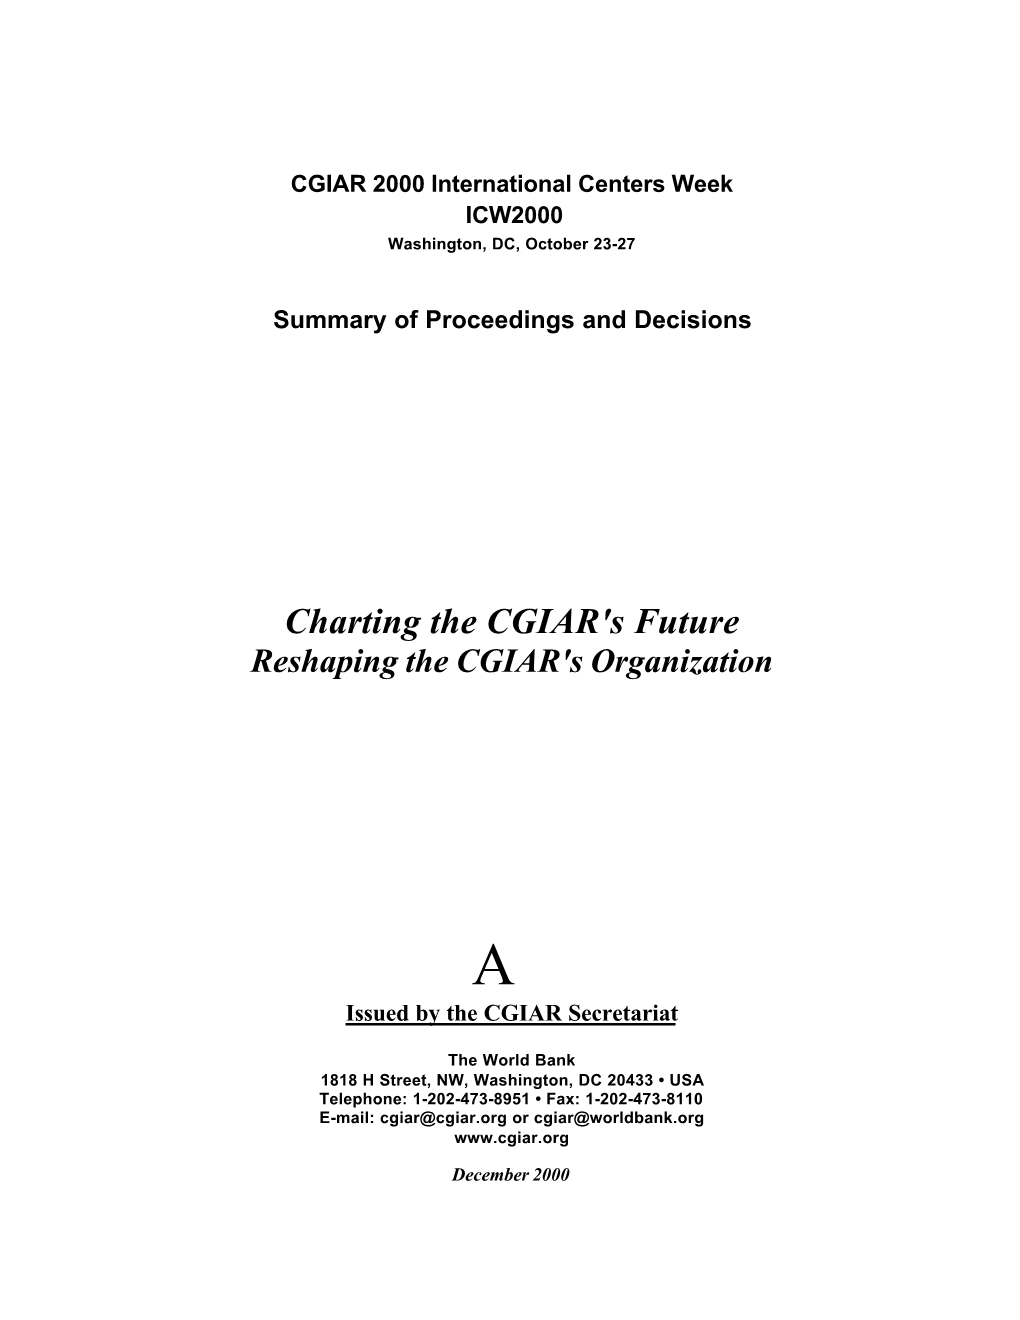 Charting the CGIAR's Future Reshaping the CGIAR's Organization